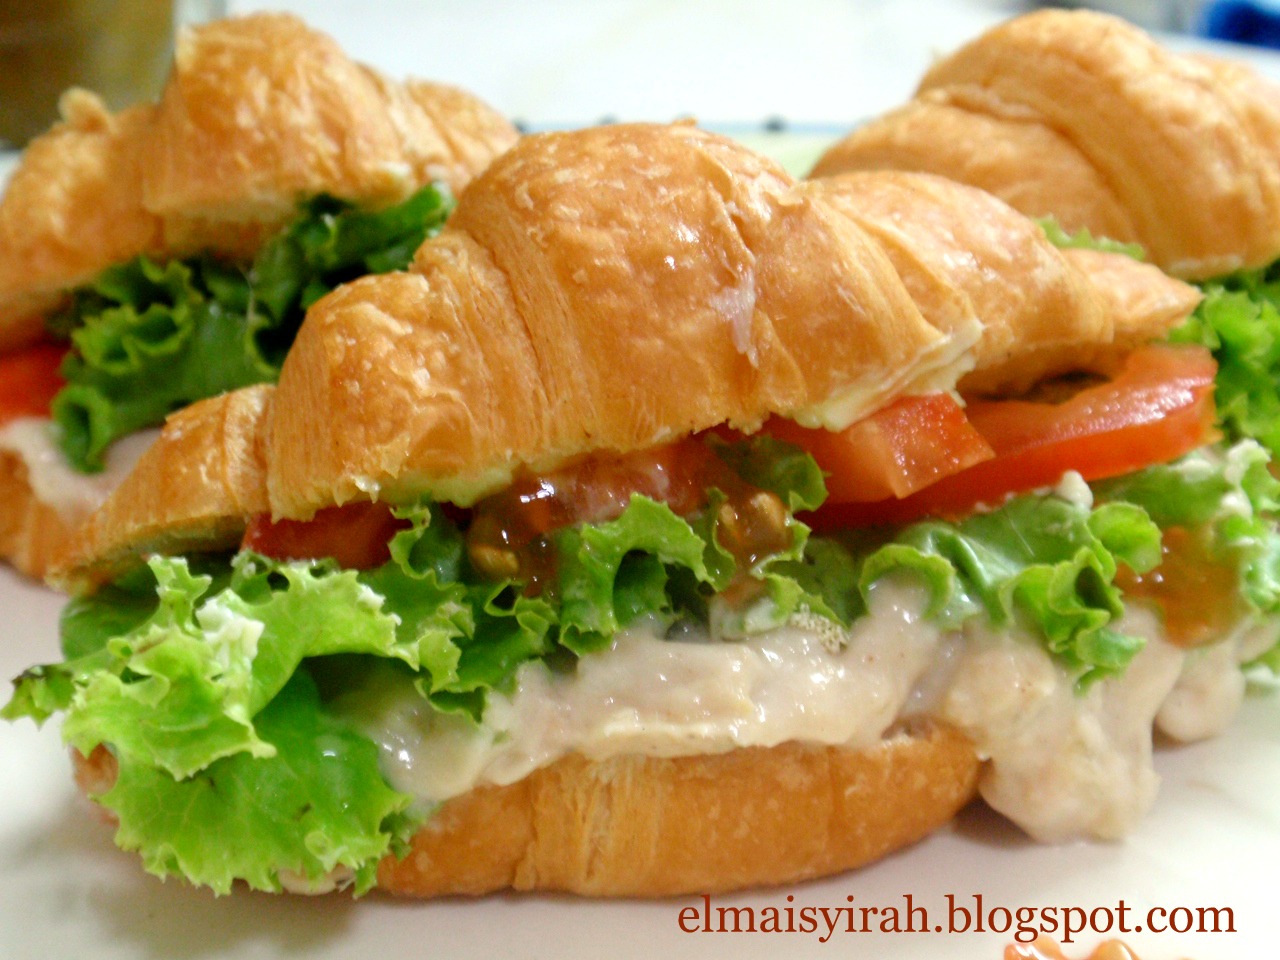 A Simple Life: Croissant Tuna Sandwich